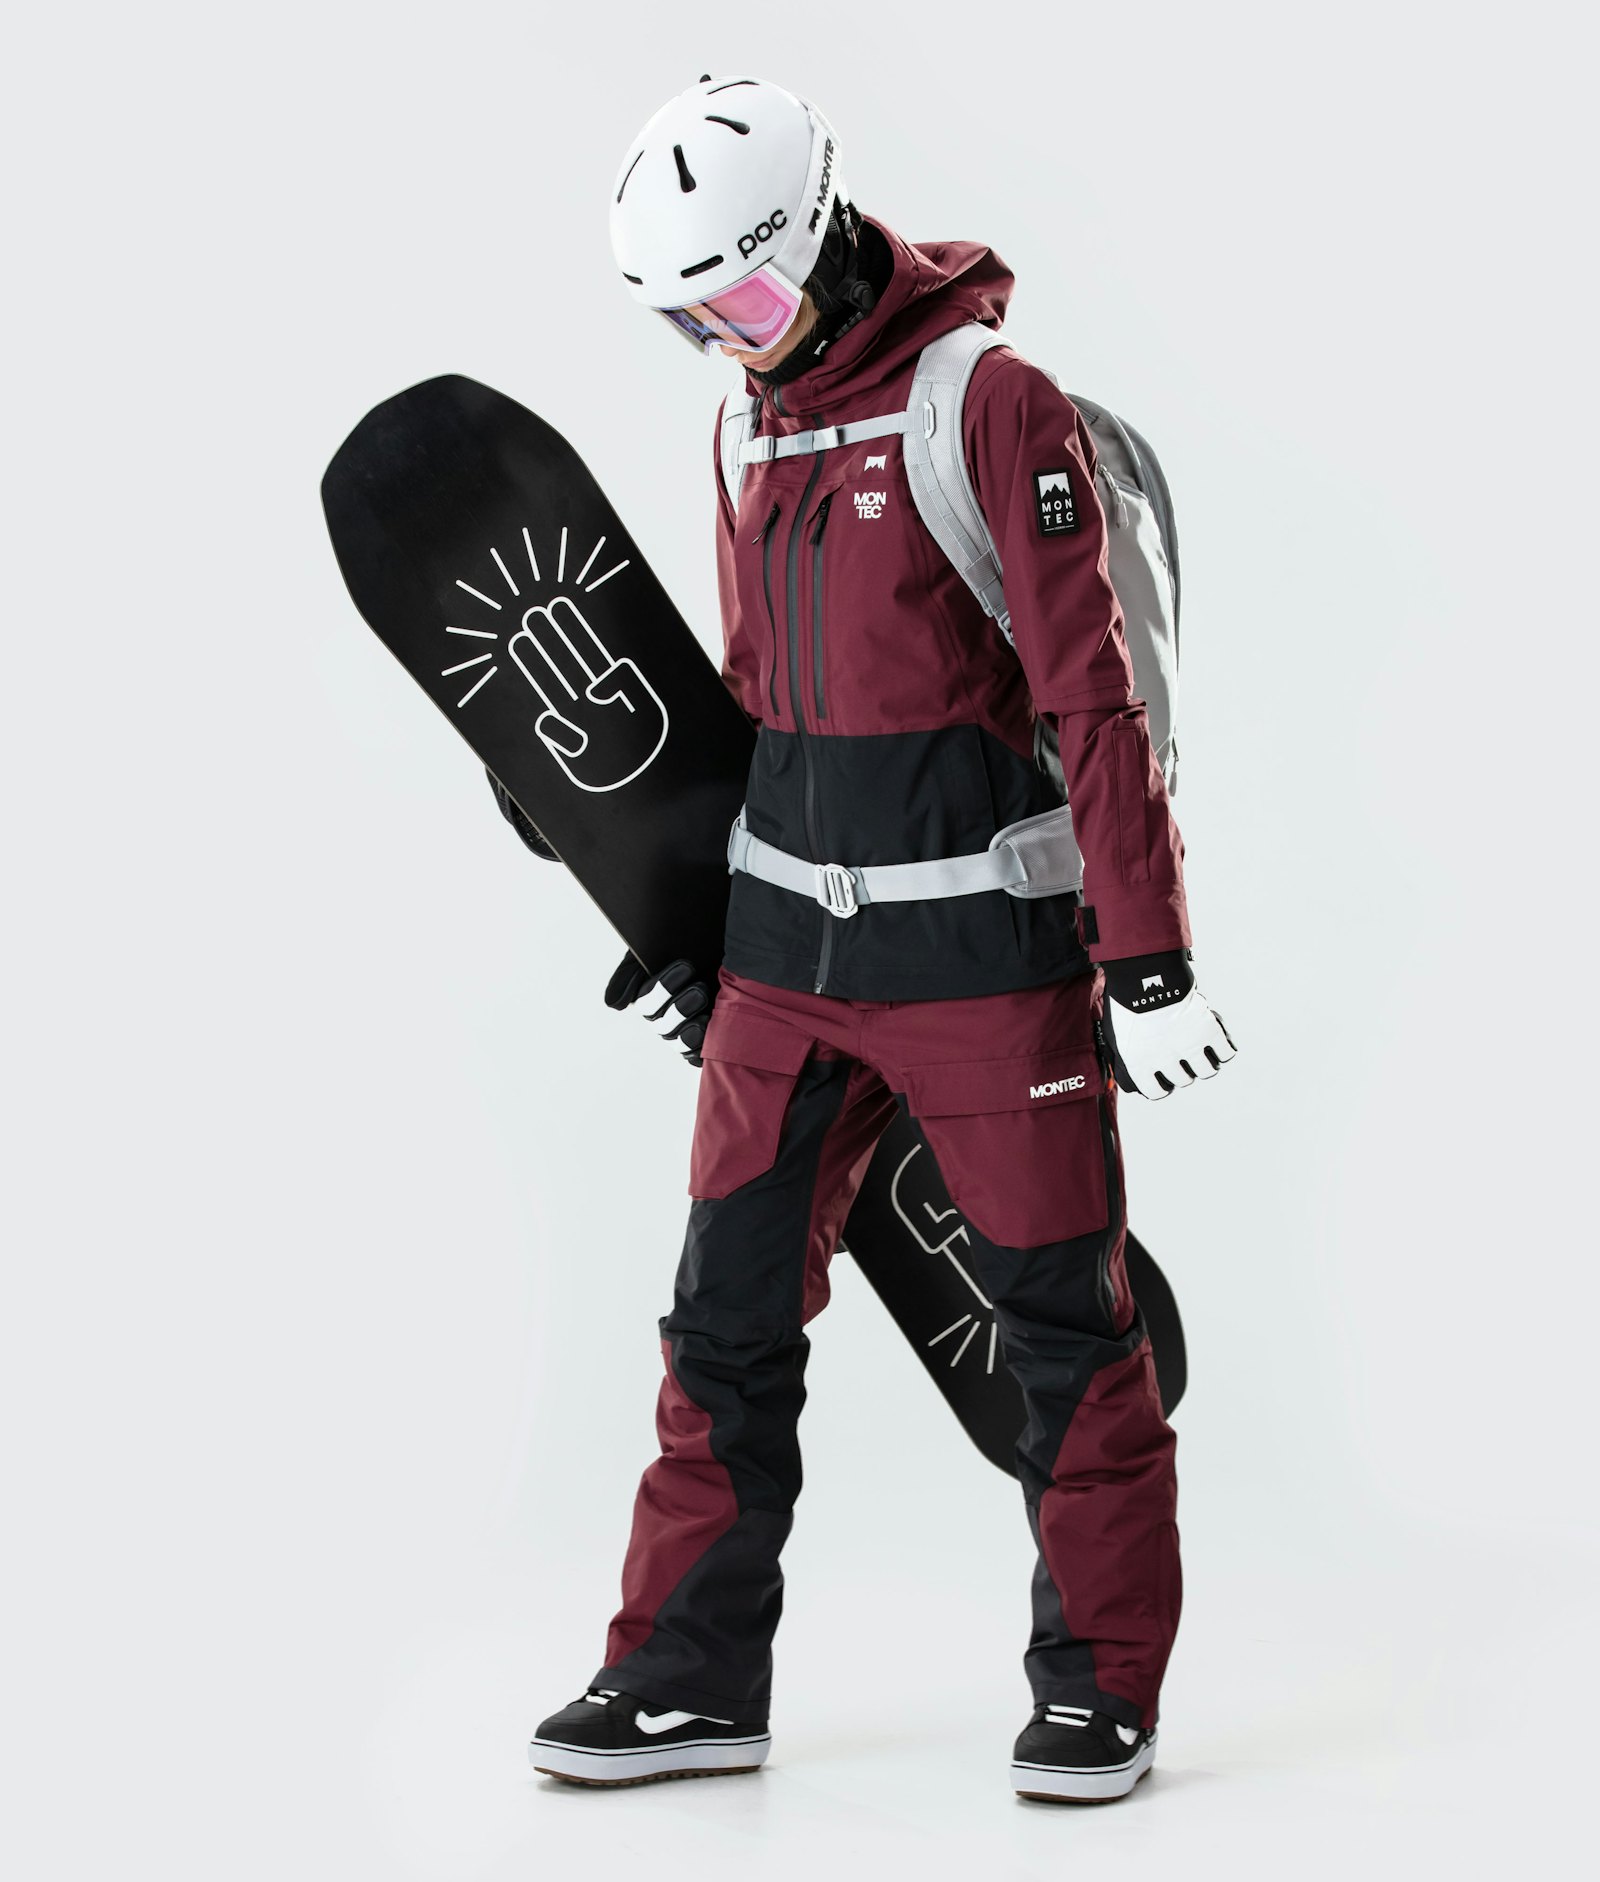 Moss W 2020 Veste Snowboard Femme Burgundy/Black